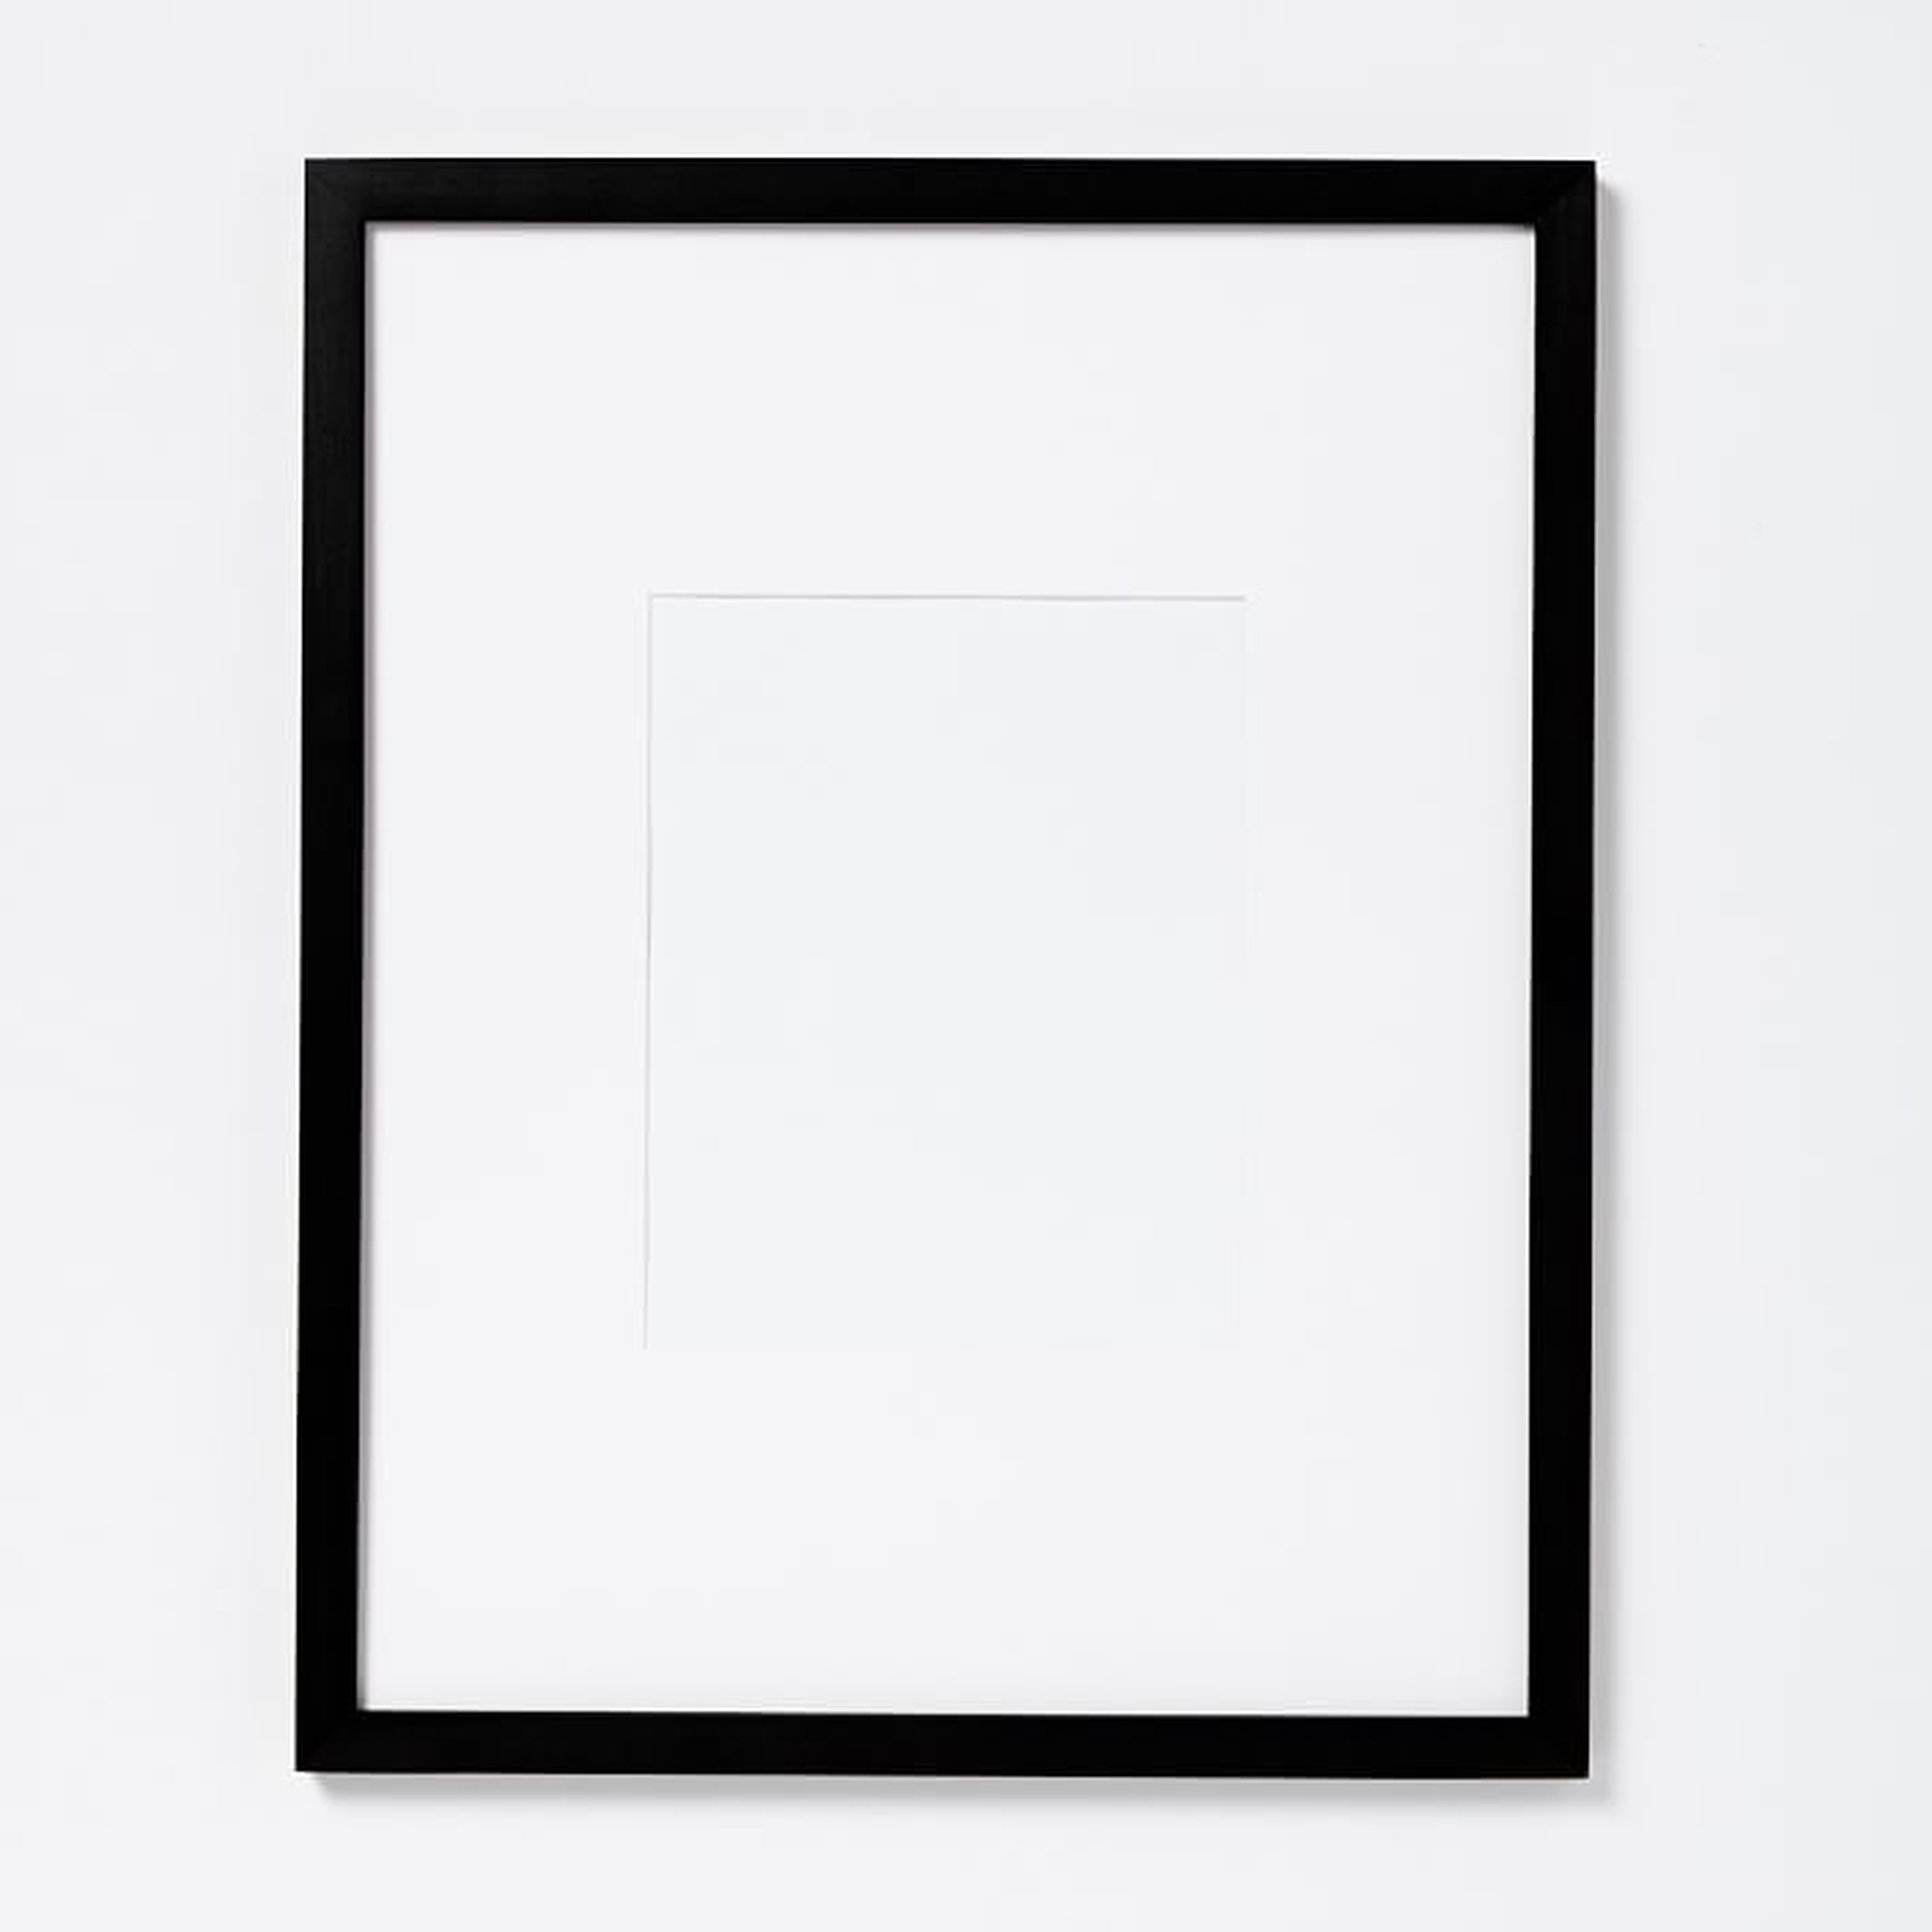 Wood Gallery Frames - Oversized Mat_black - West Elm